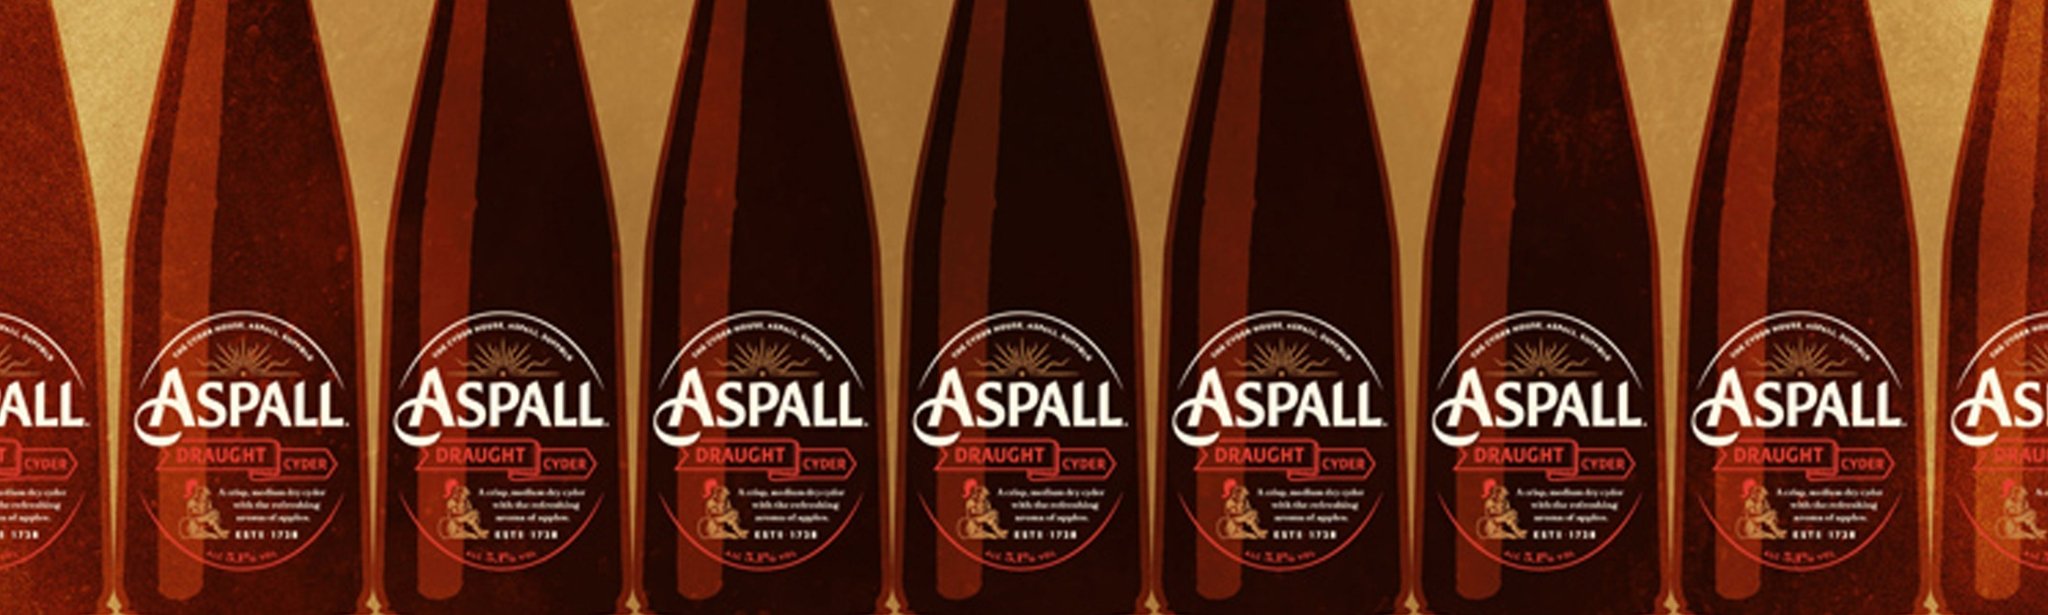 Aspall - The Bottle Club